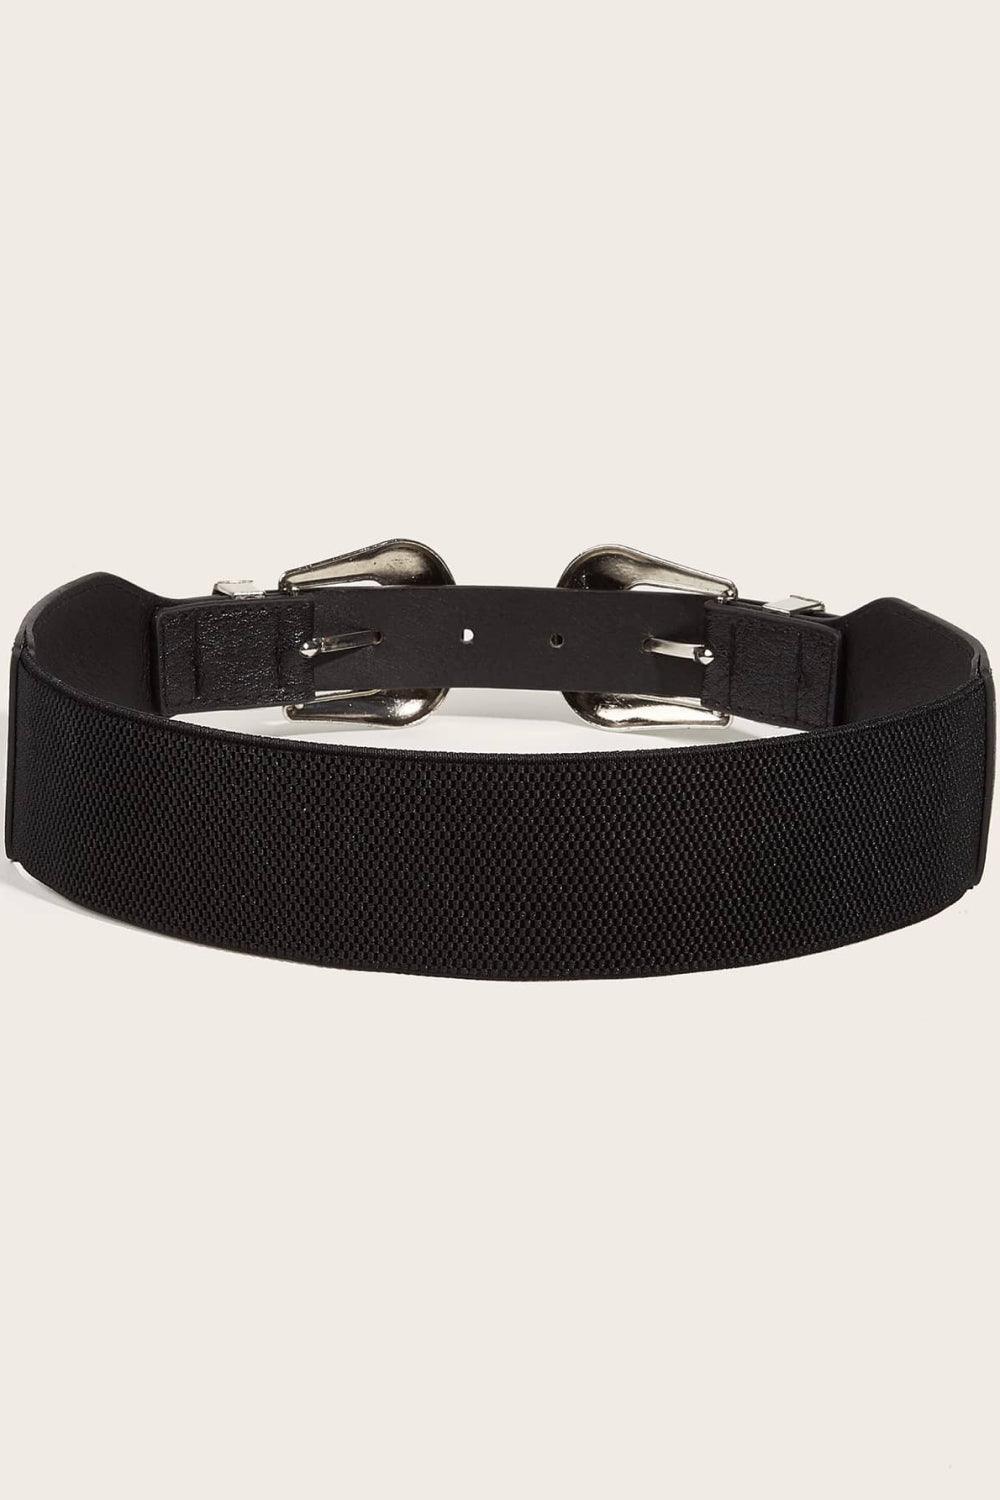 Double Buckle Black Leather Belt - MXSTUDIO.COM